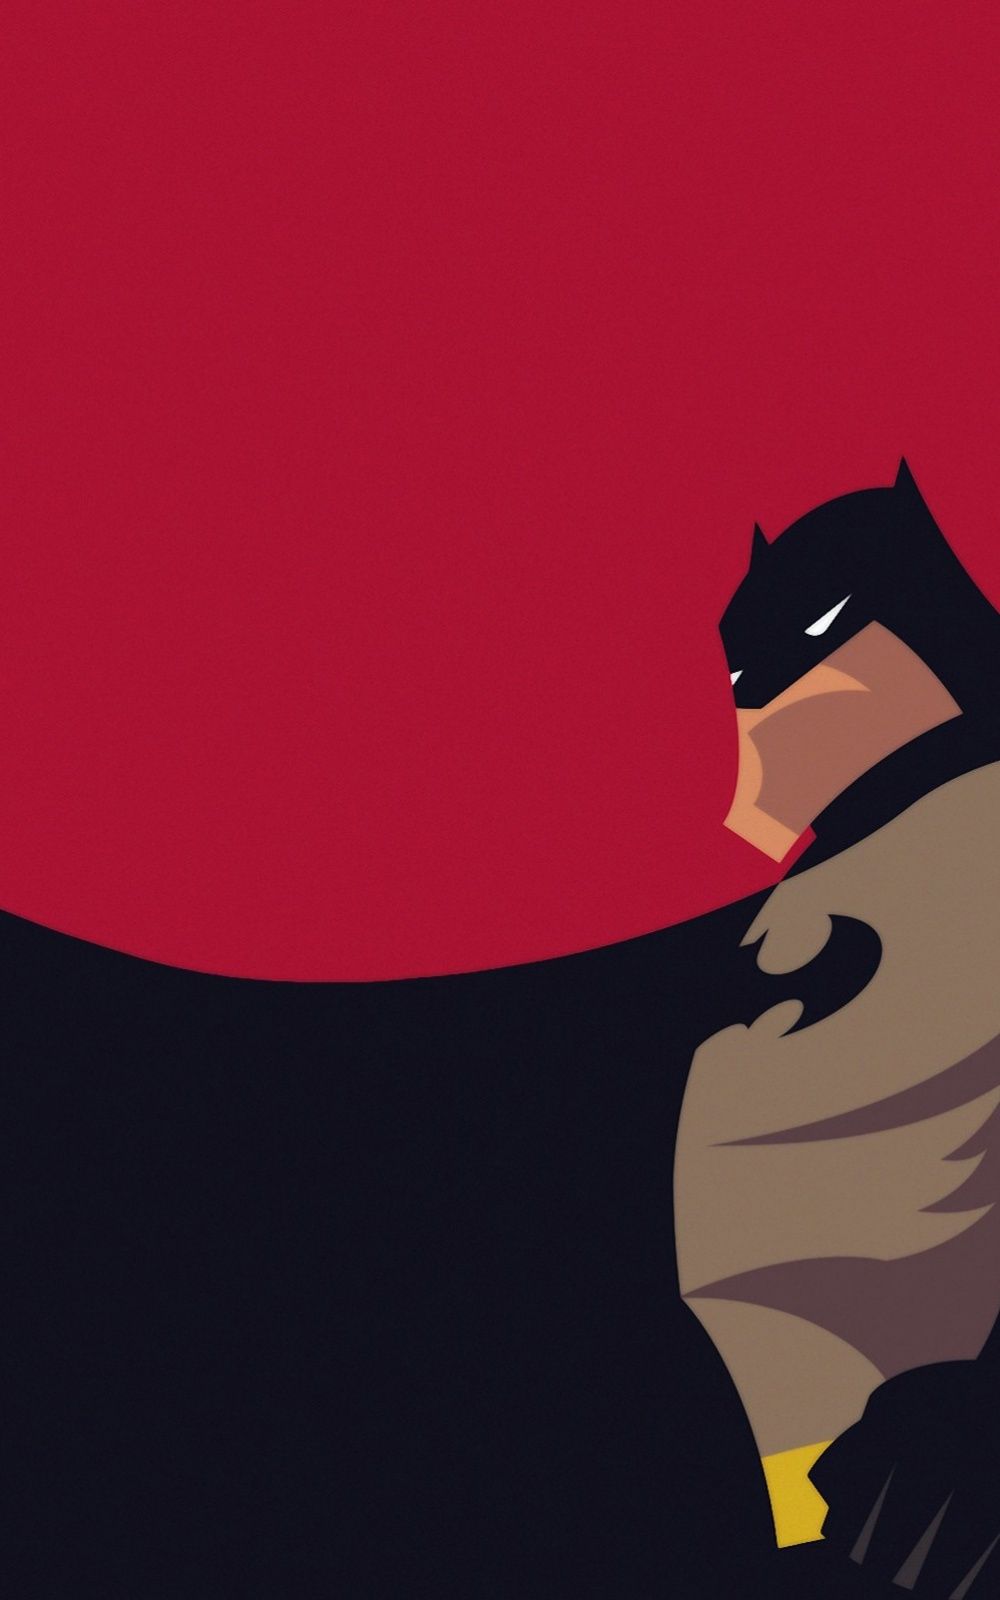 Batman iPhone Wallpaper HD Wallpaper For Android